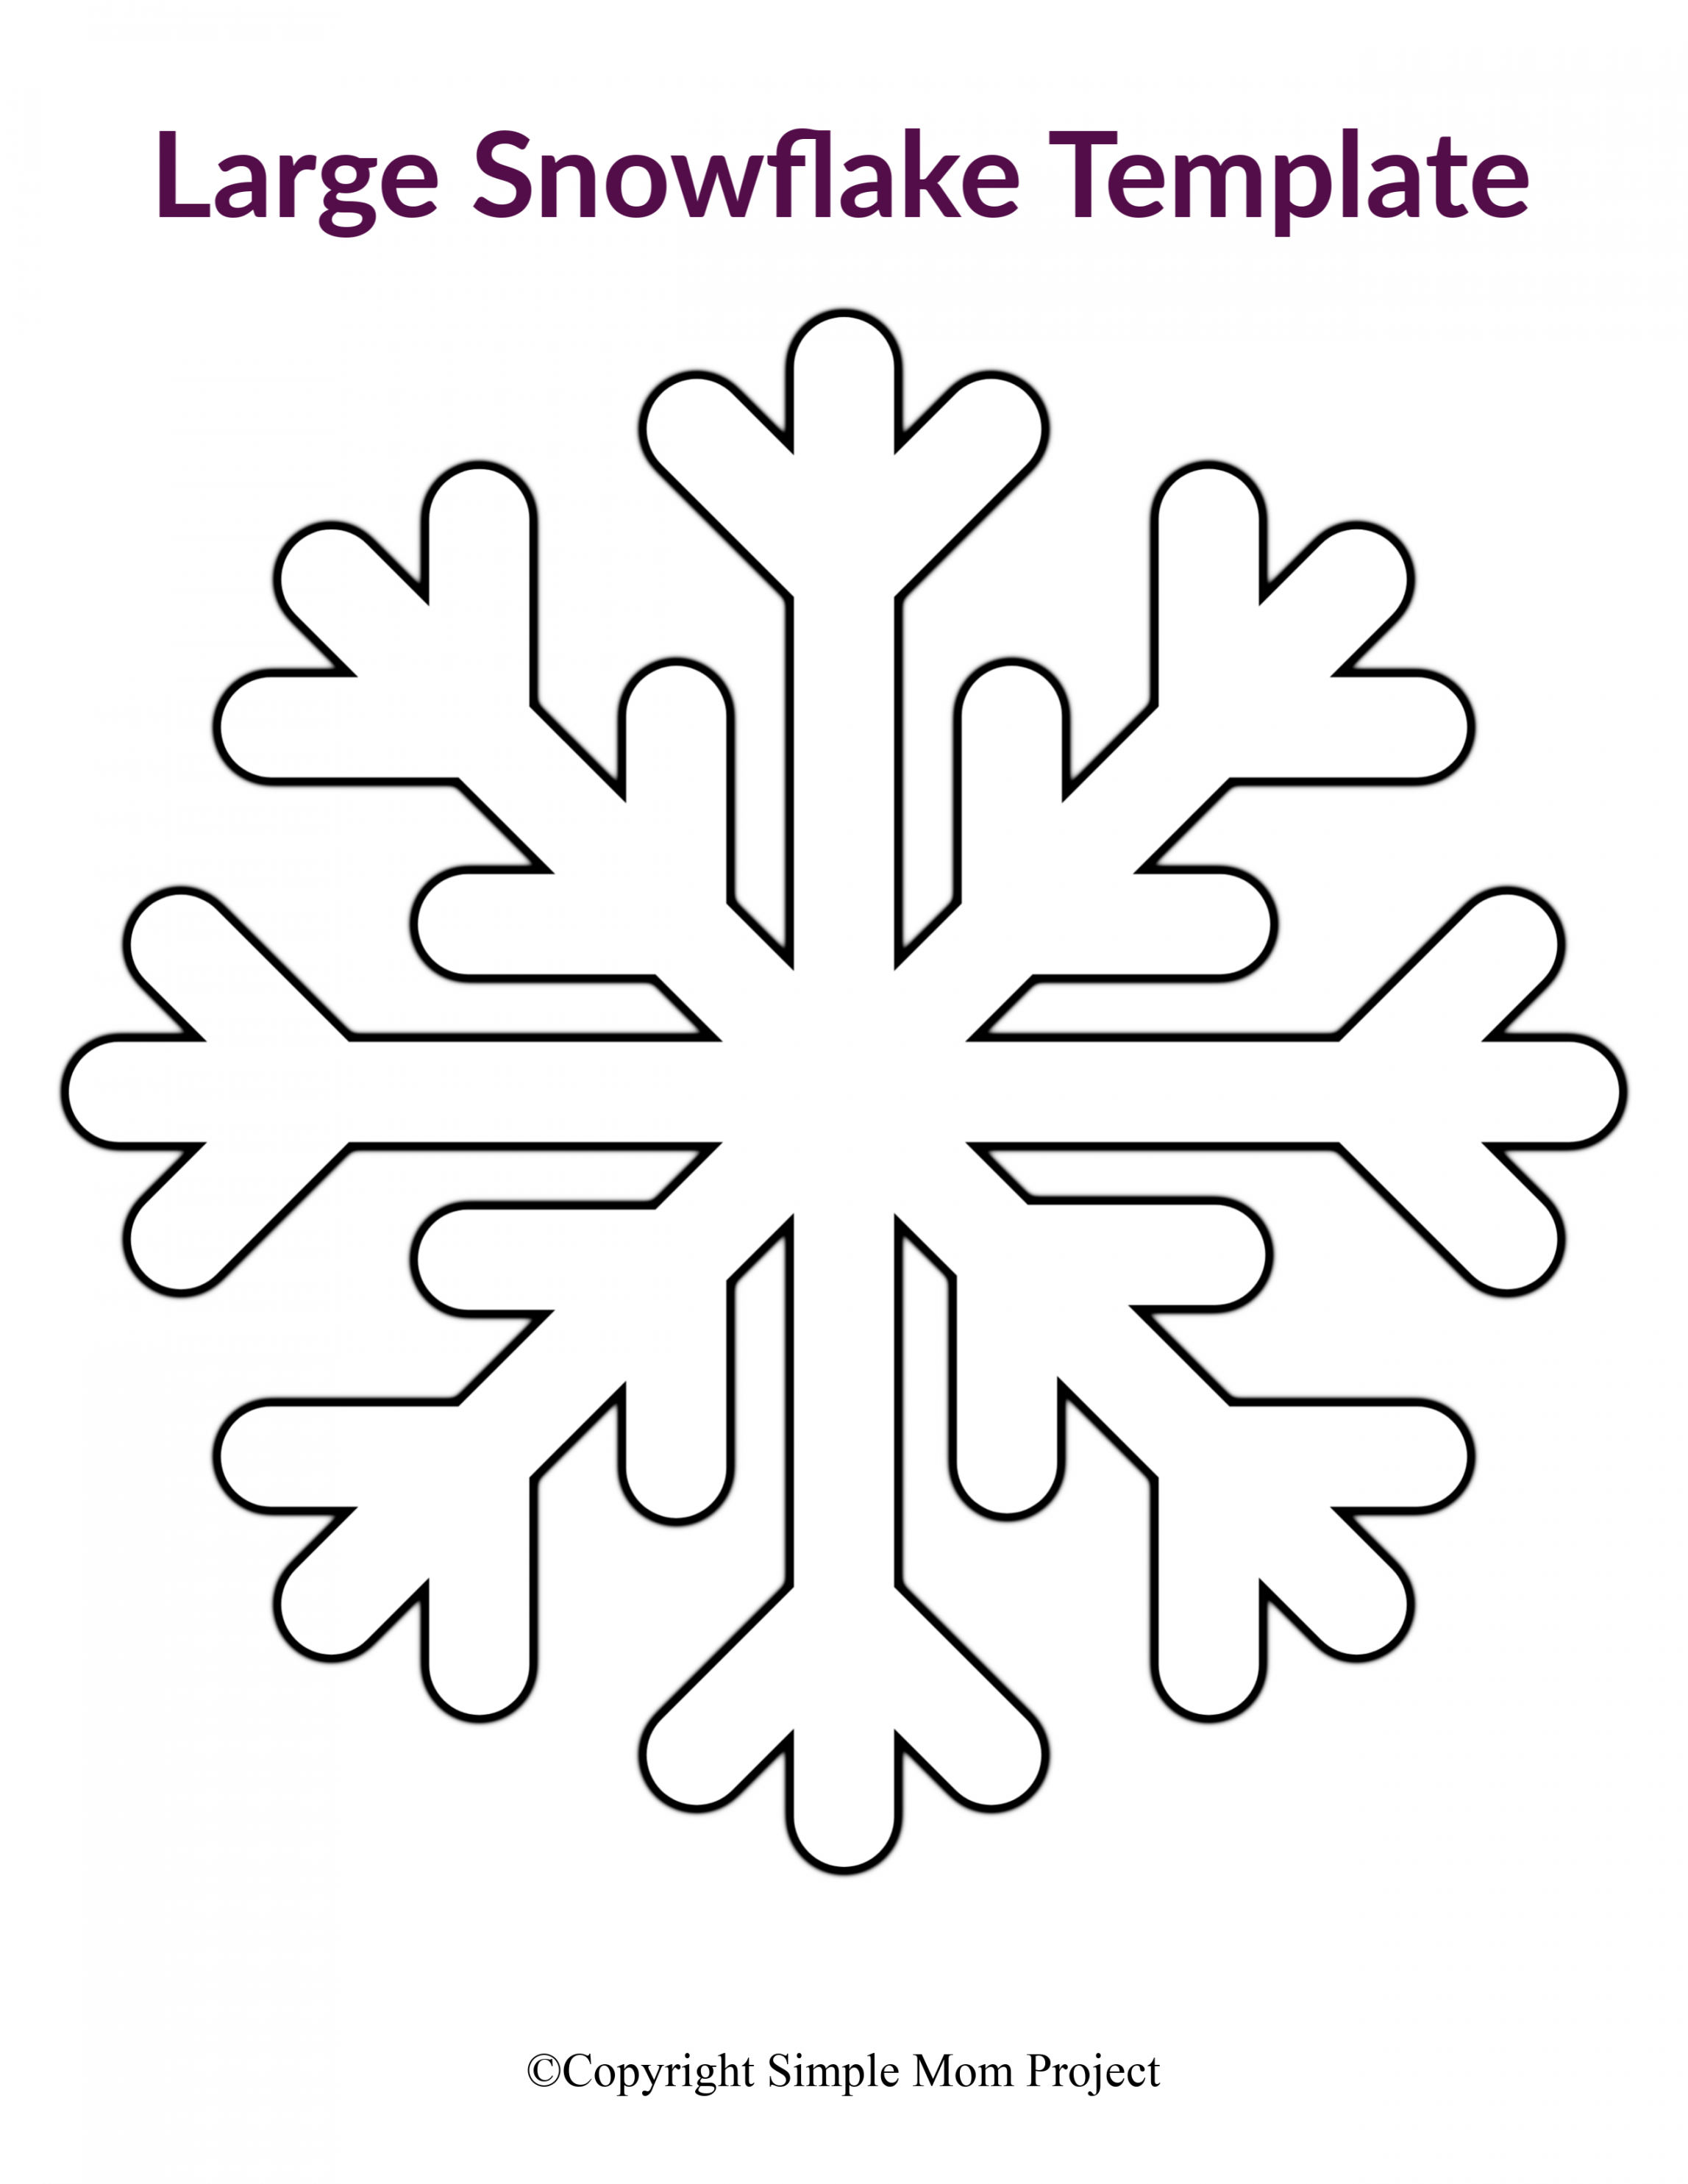 Free Printable Large Snowflake Templates - Simple Mom Project - FREE Printables - Snowflake Template Printable